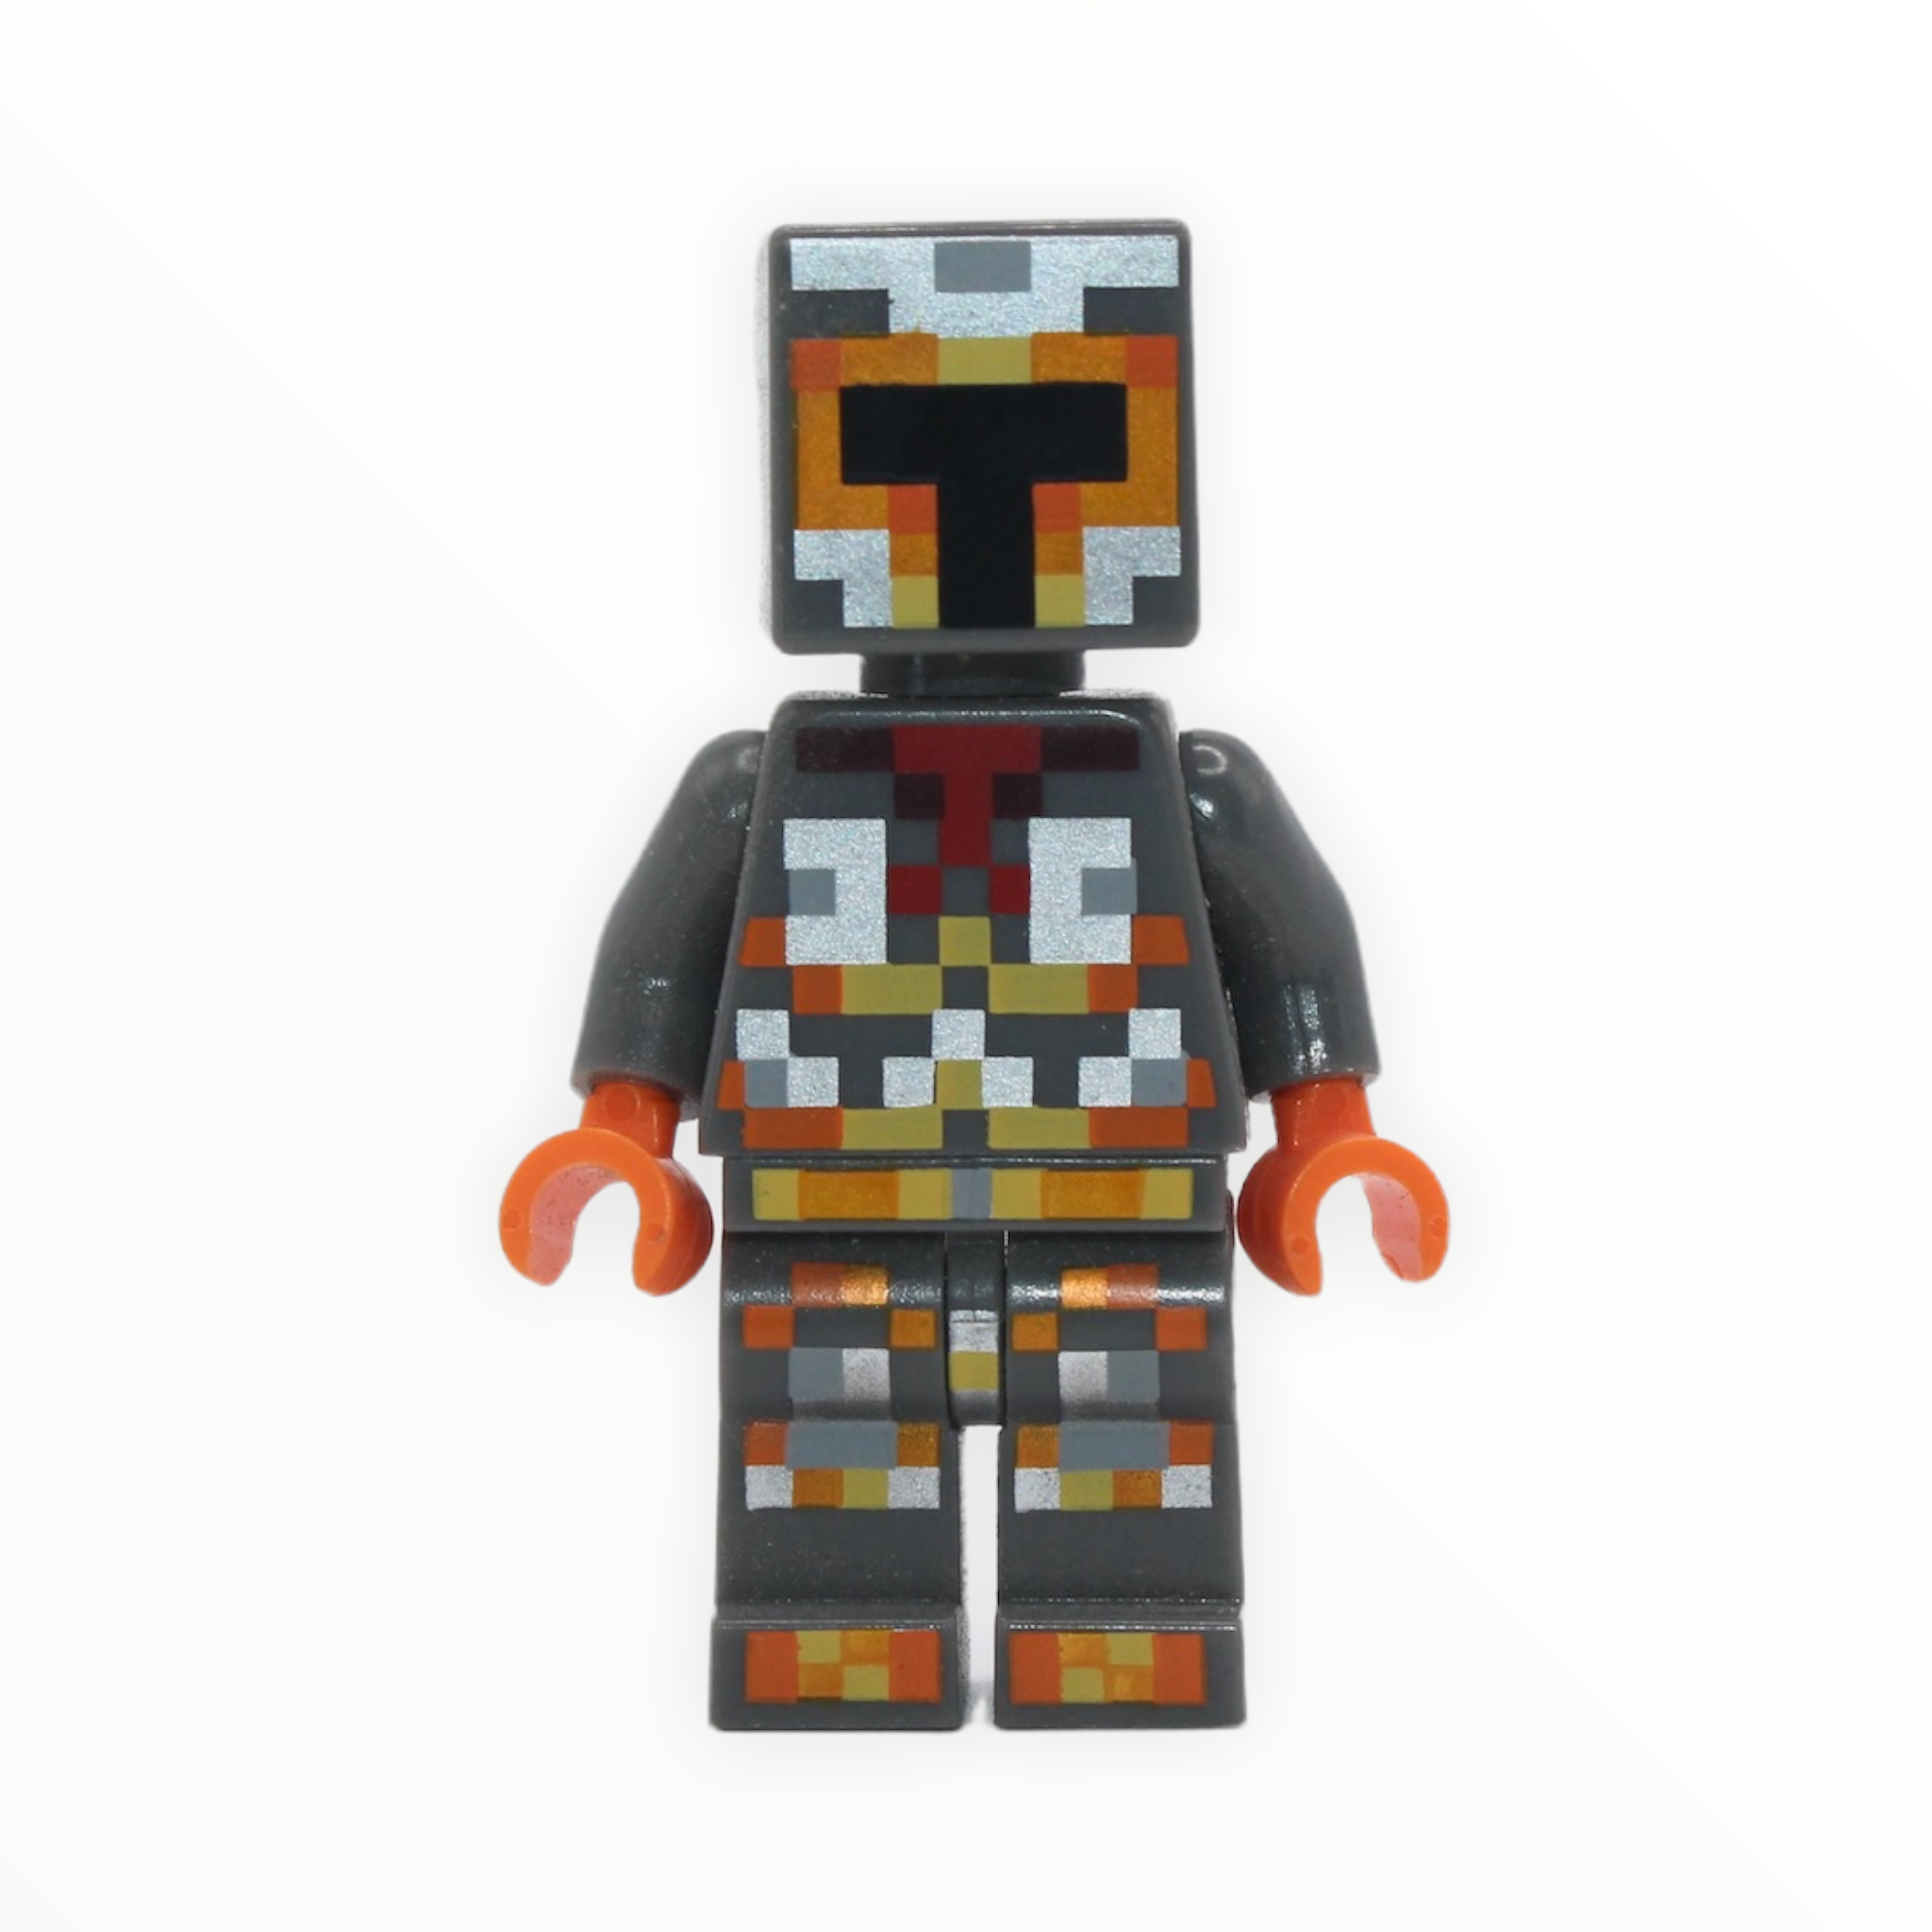 Minecraft Skin 1 (orange and silver/grey armor)